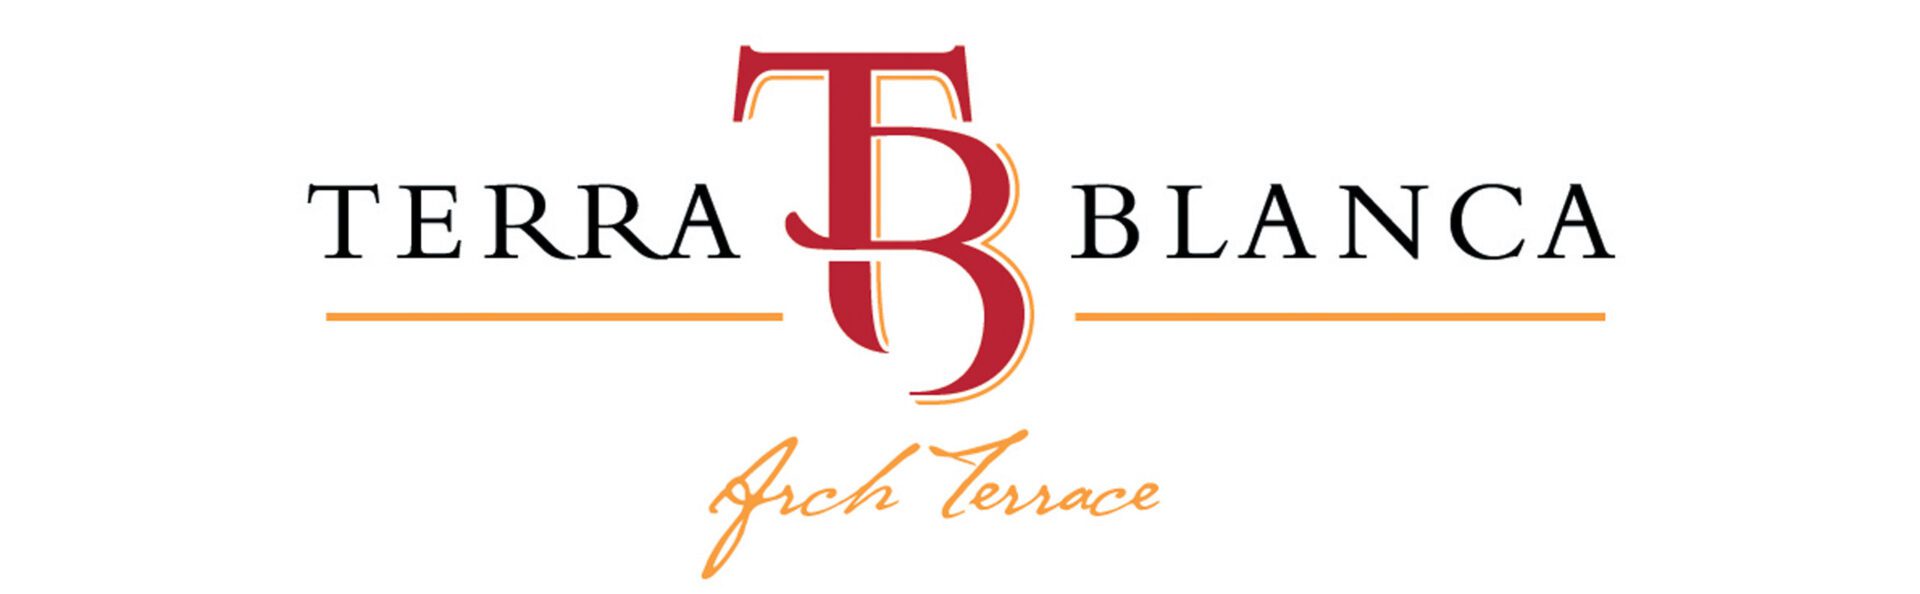 A logo of the brand terra blanca arch terrace.